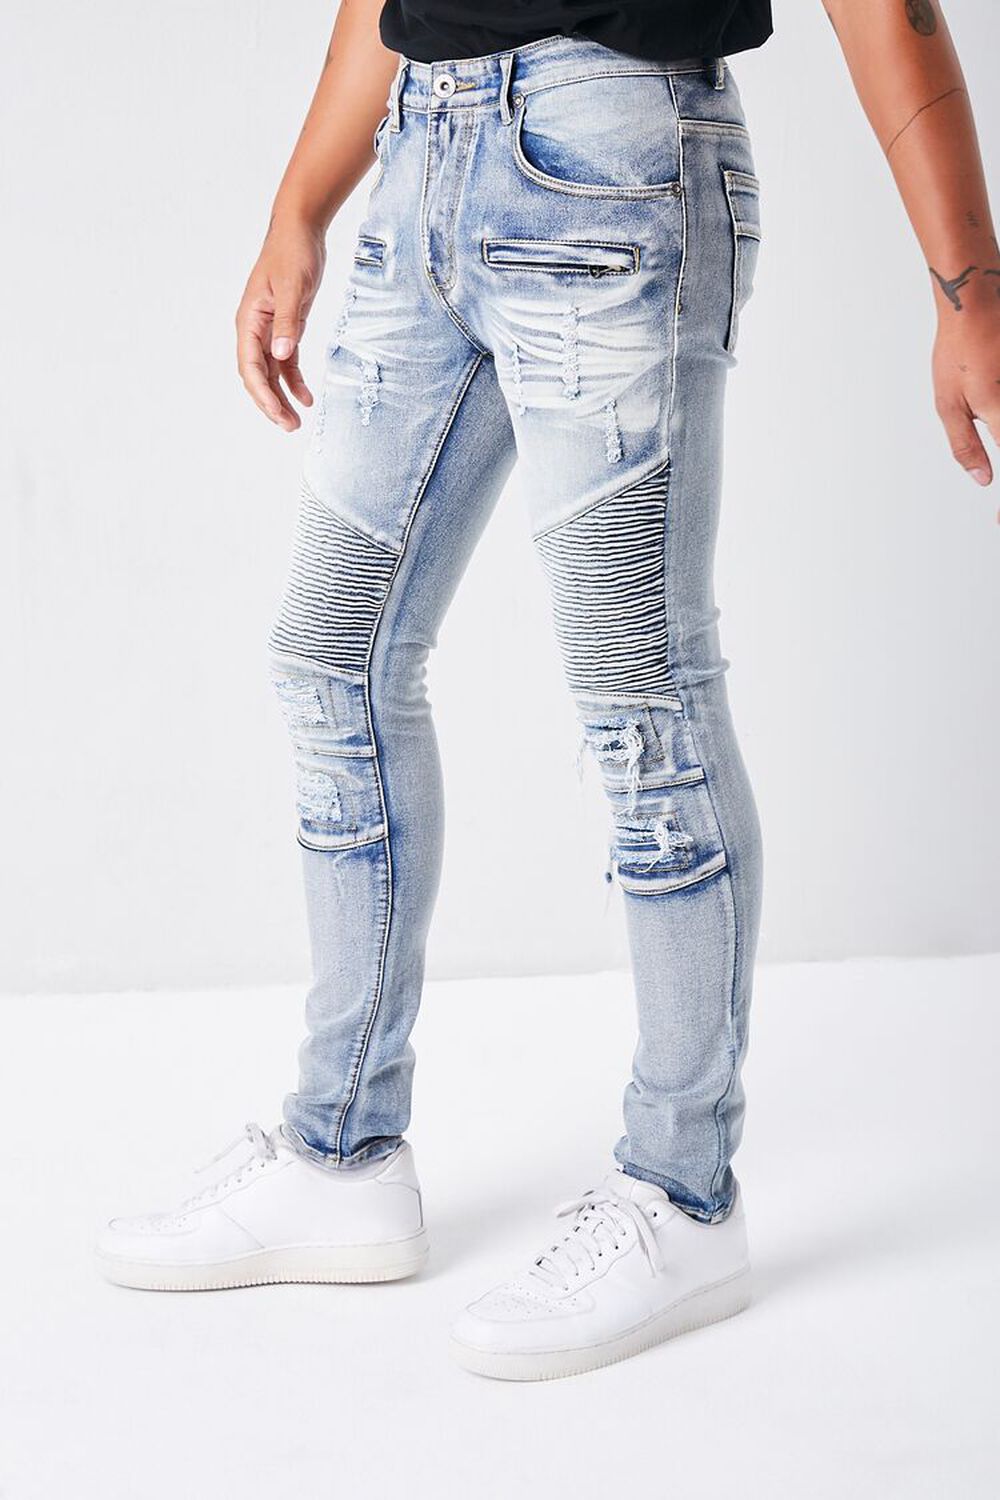 BLUE Distressed Slim-Fit Moto Jeans, image 3